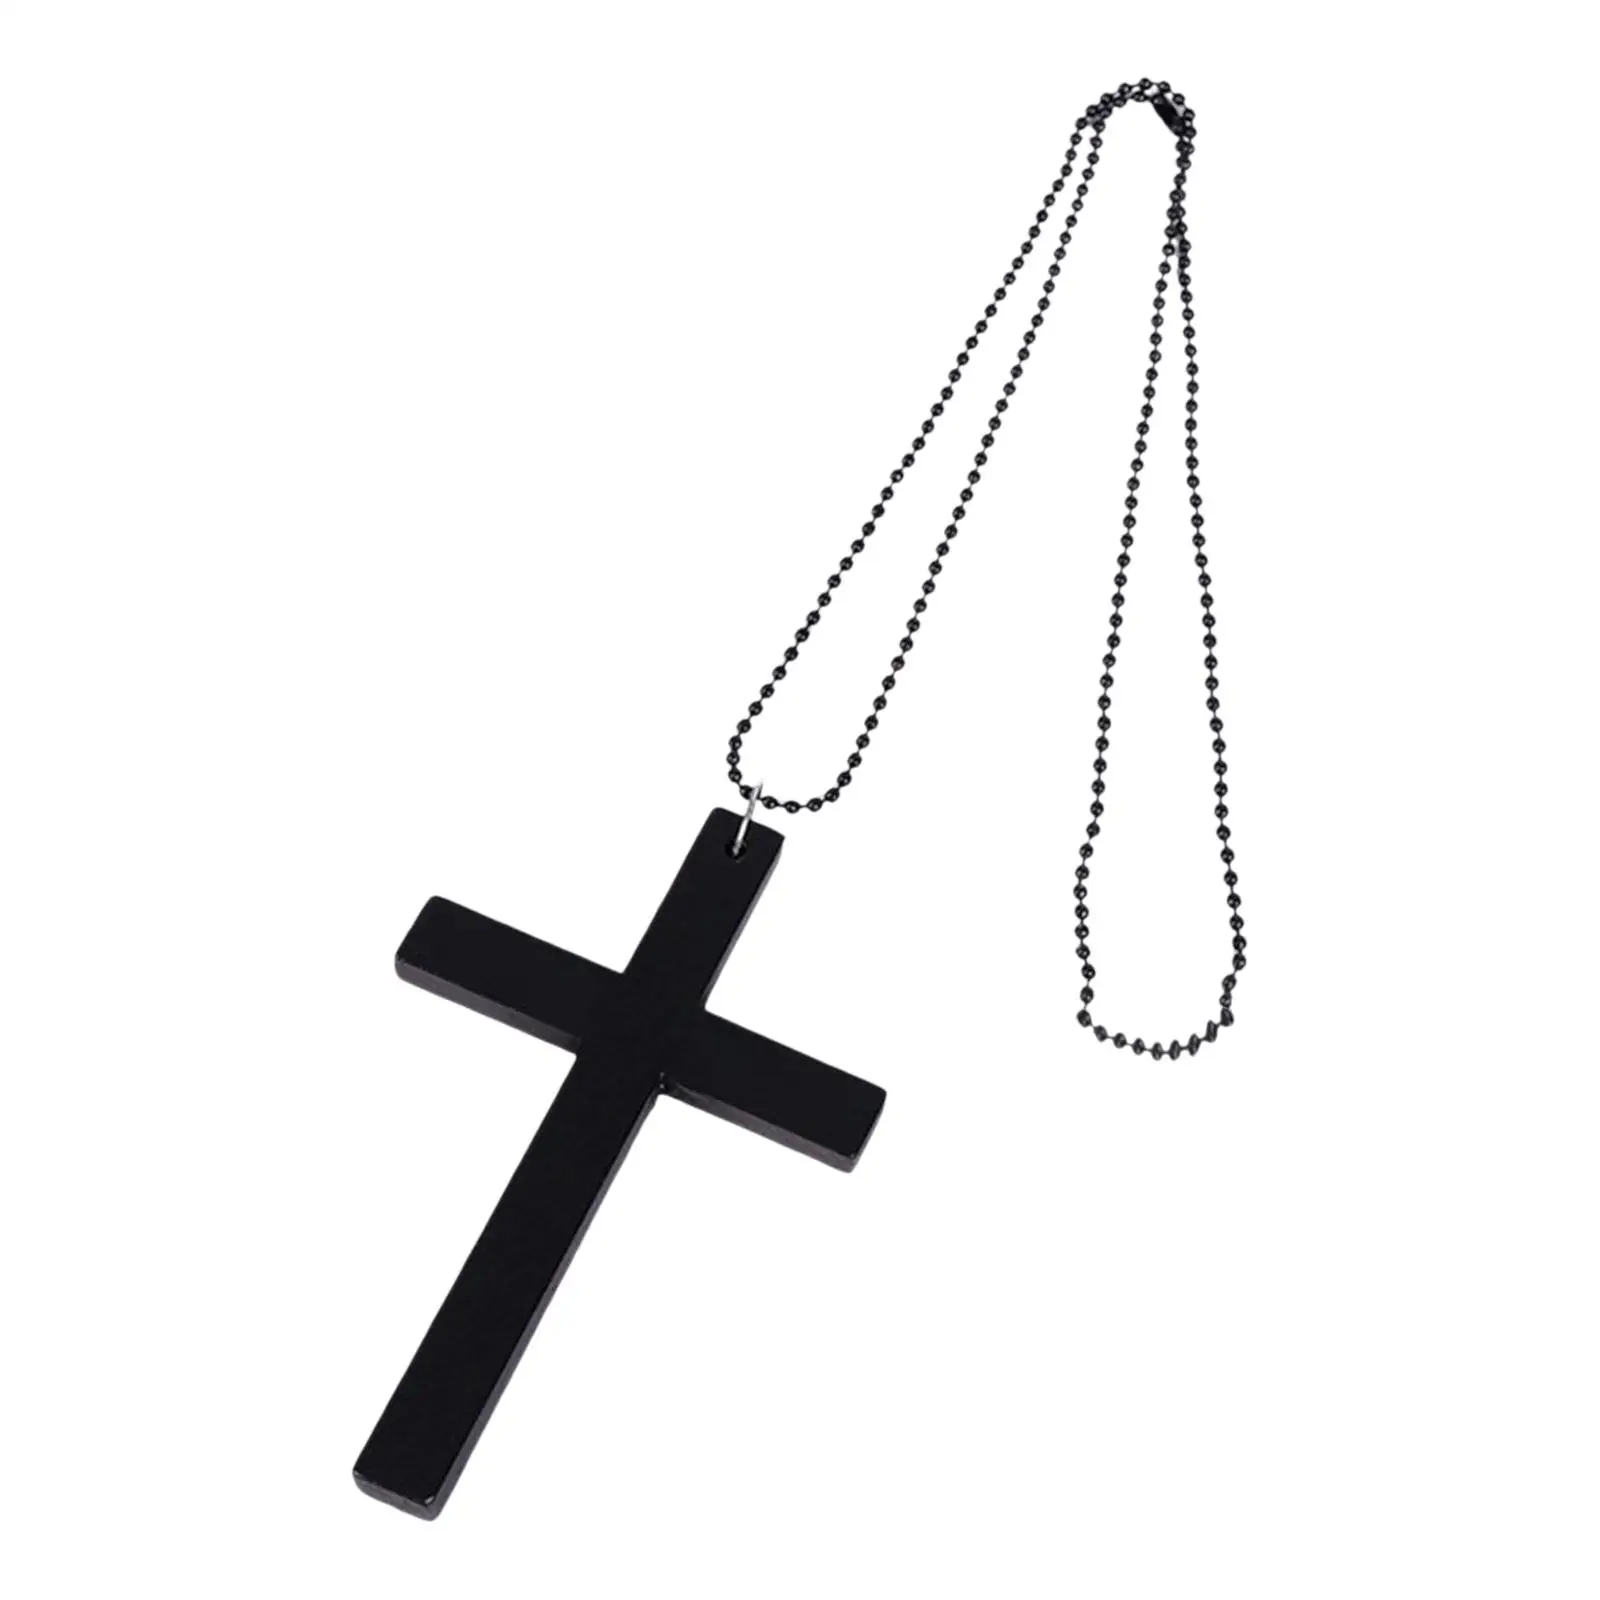 Wood Cross Pendant Necklace Cross Crucifix Charm for Women Men Jewelry Gift